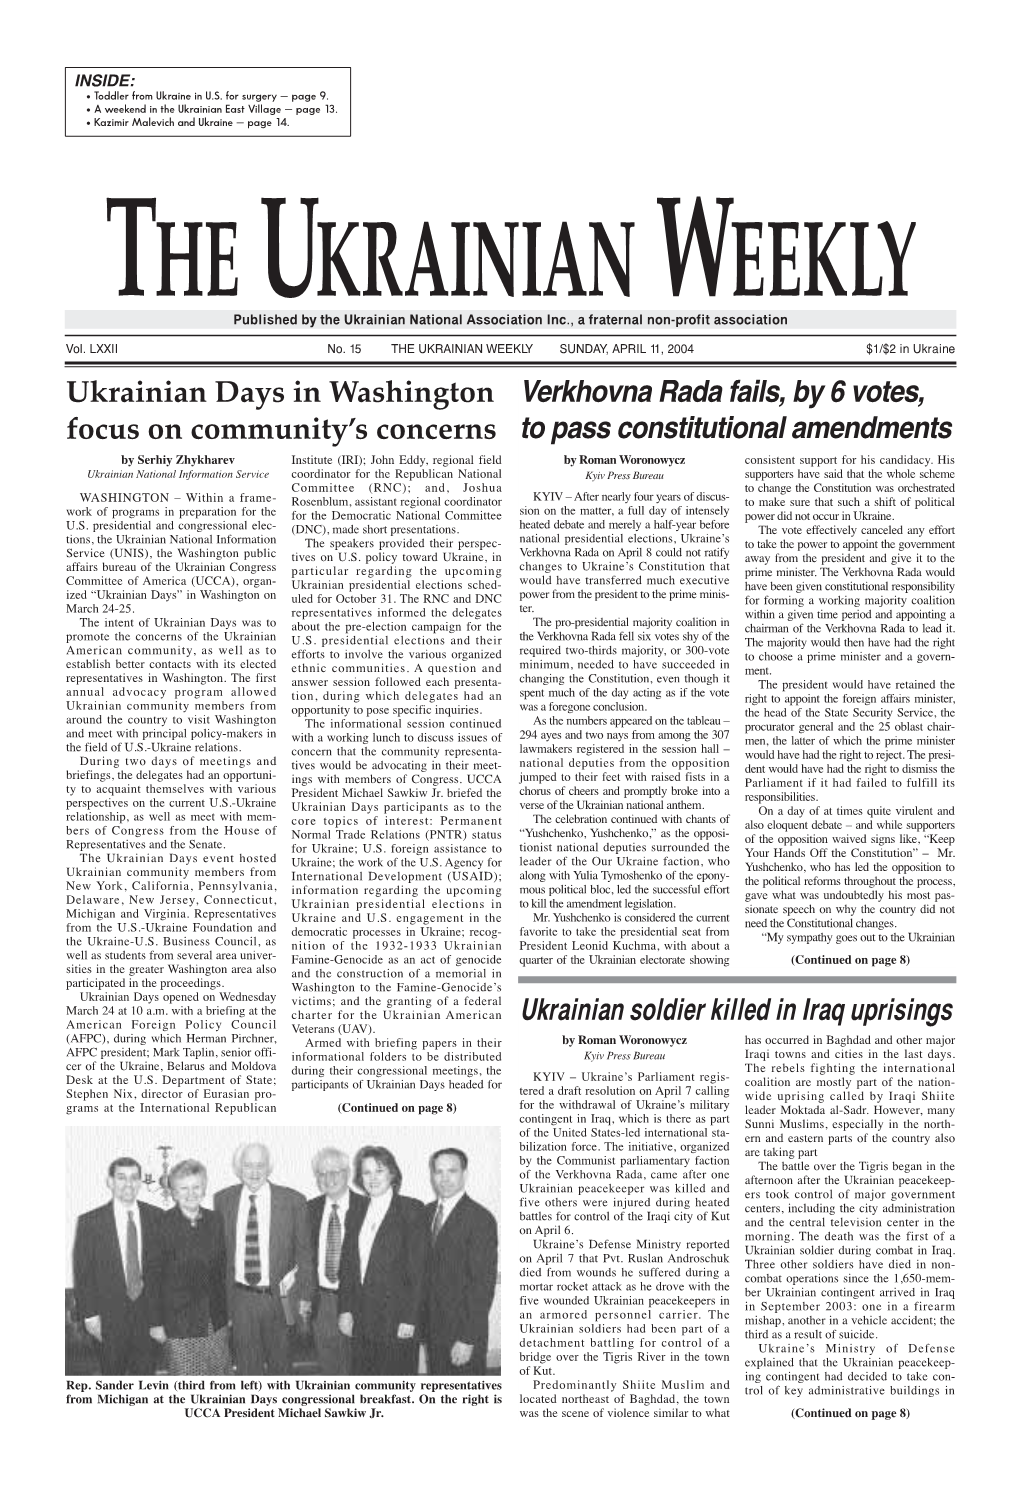 The Ukrainian Weekly 2004, No.15